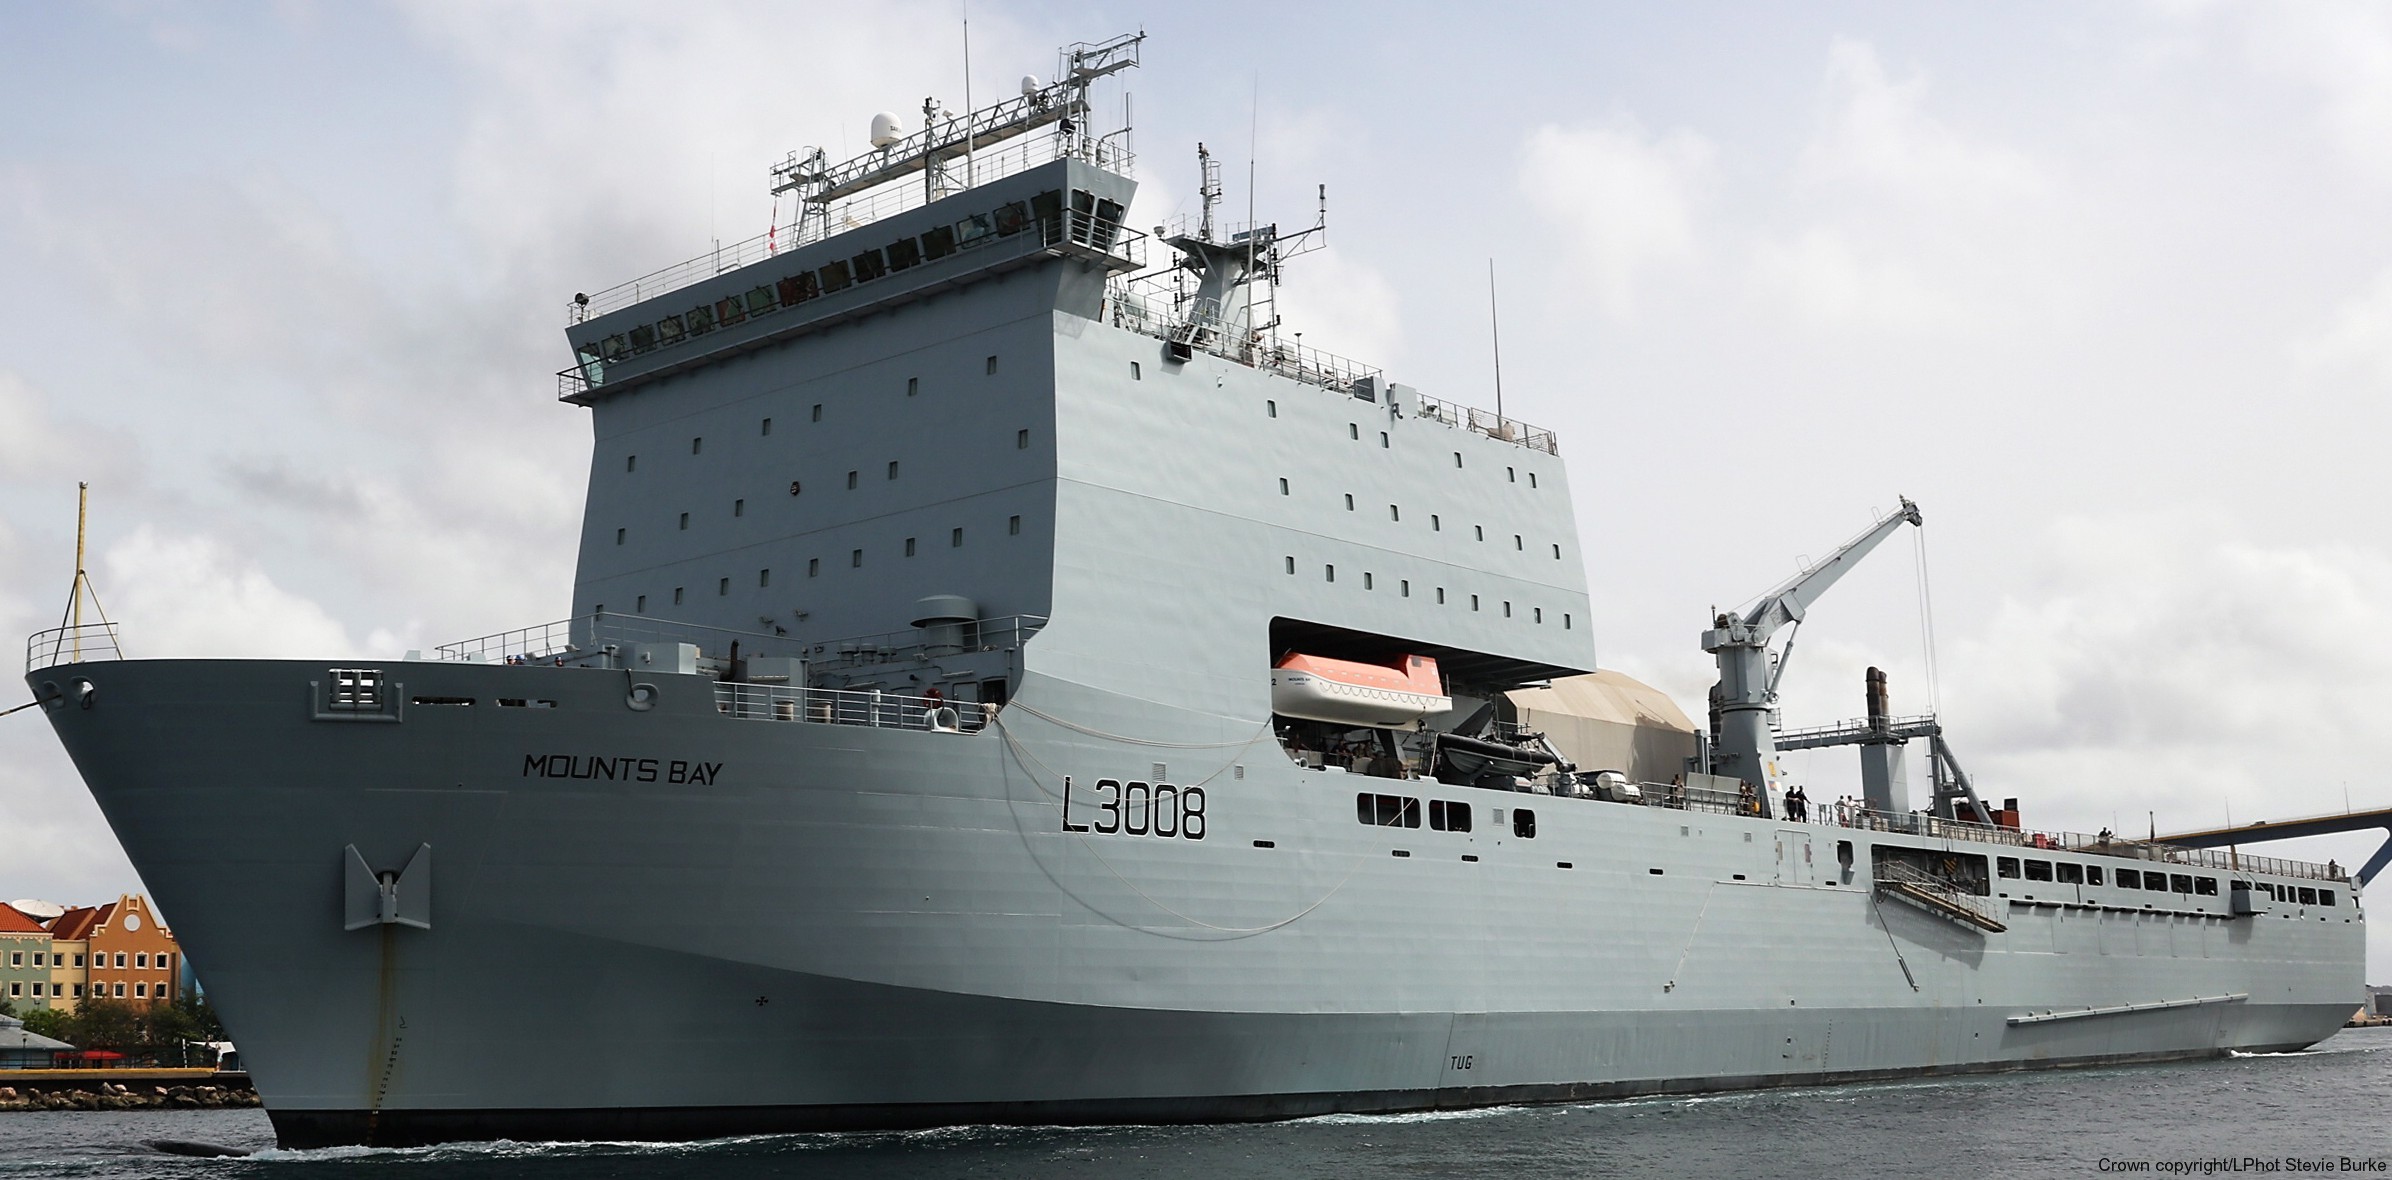 l-3008 rfa mounts bay dock landing ship lsd royal fleet auxilary navy 26